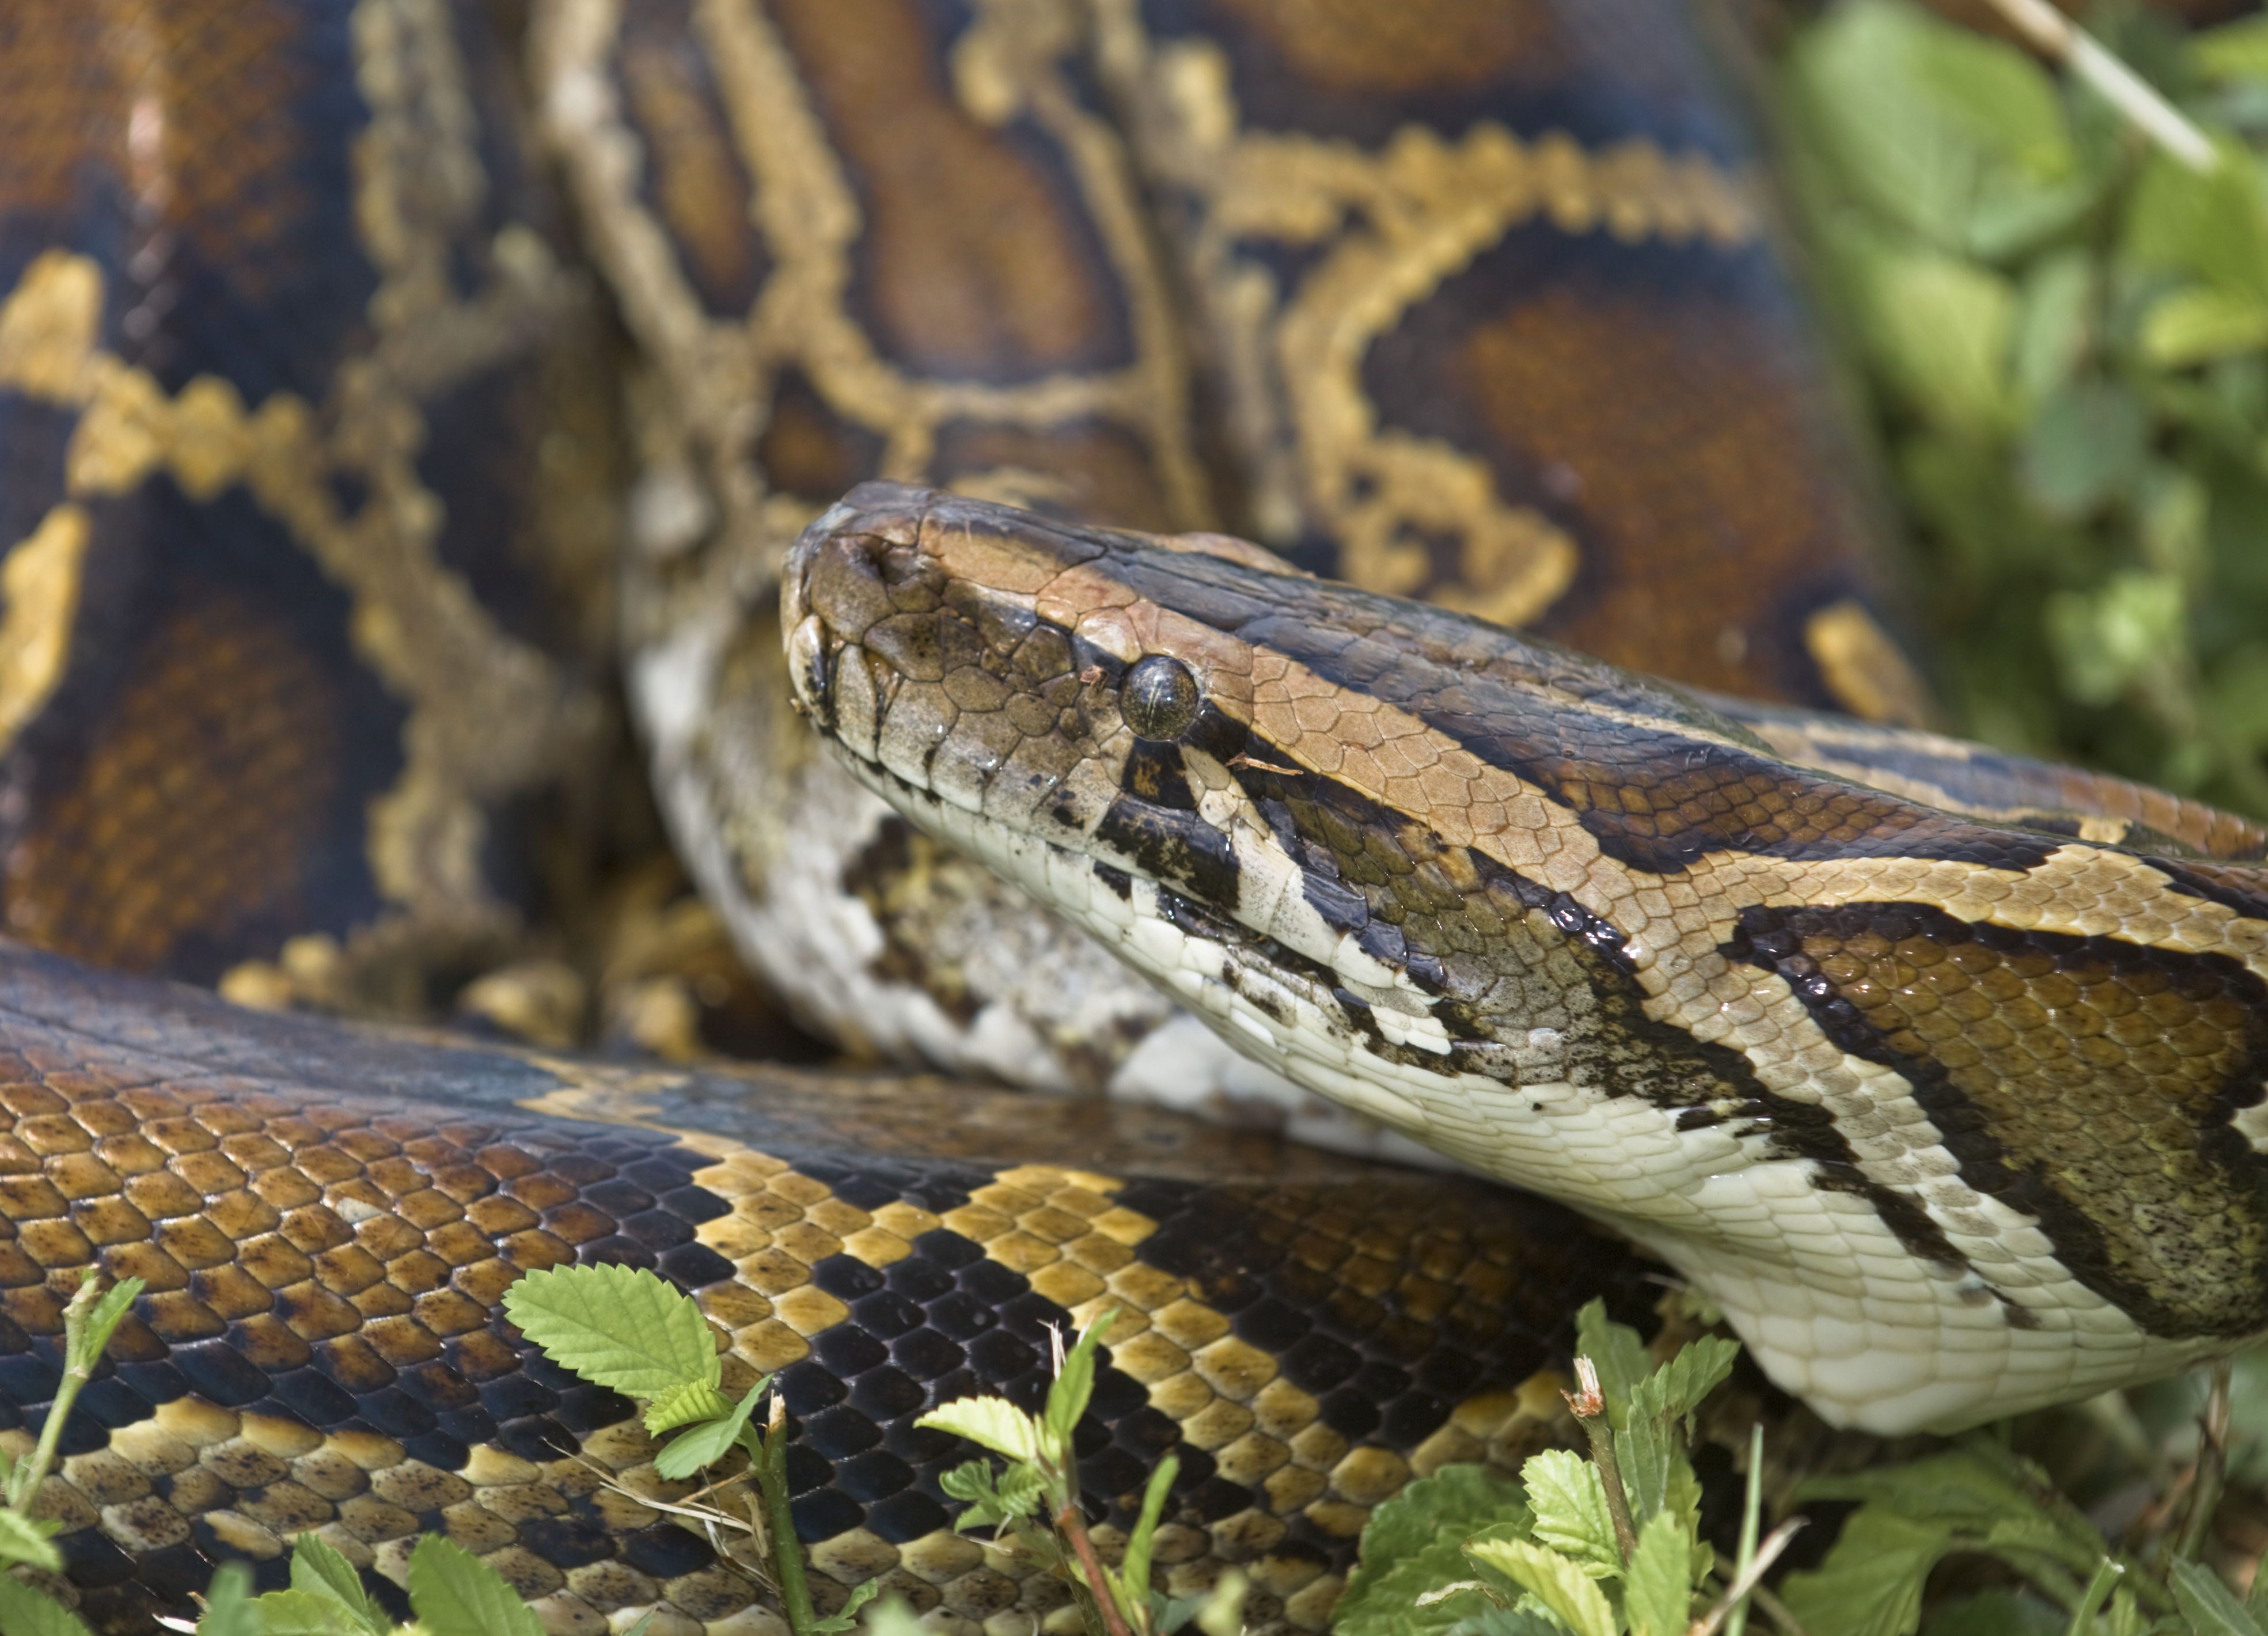 Meet the python